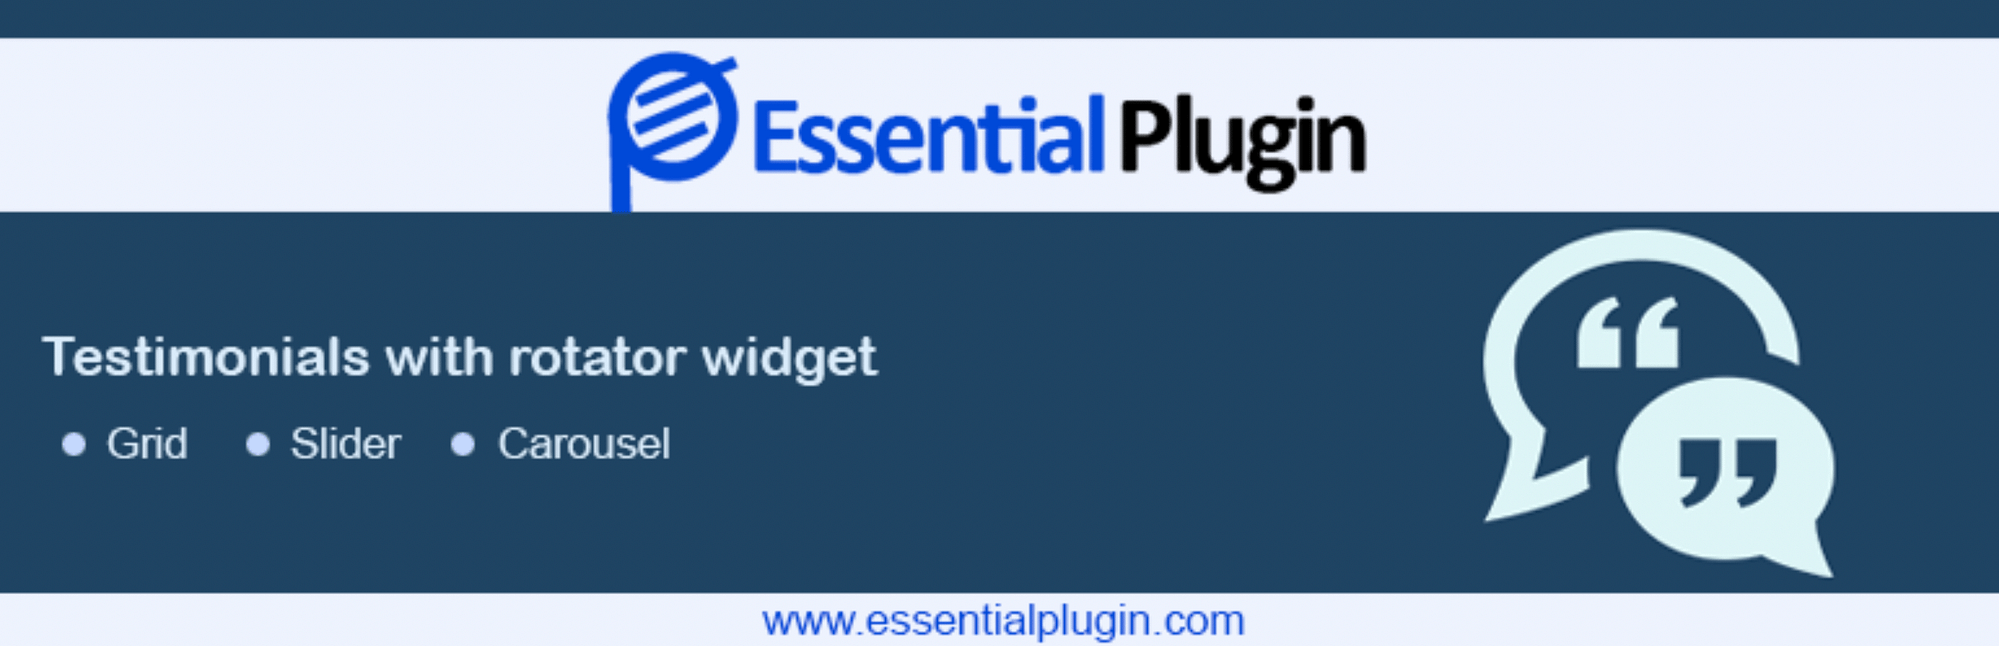 Best WordPress testimonial plugins: Testimonials with rotator widget banner